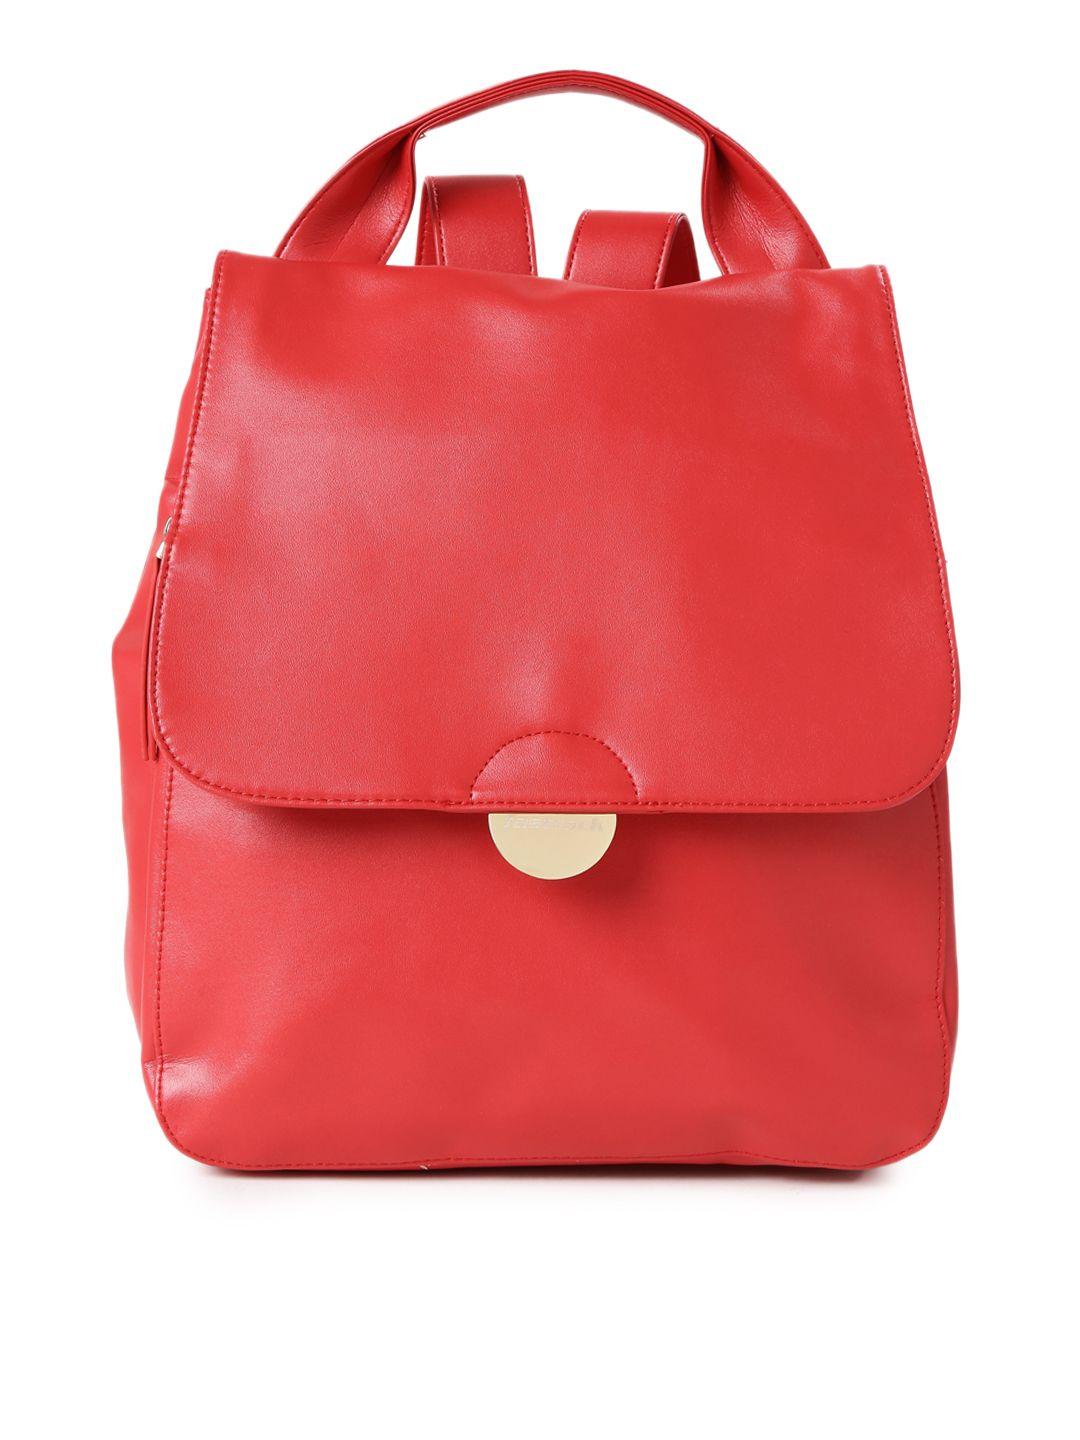 fastrack women red backpack